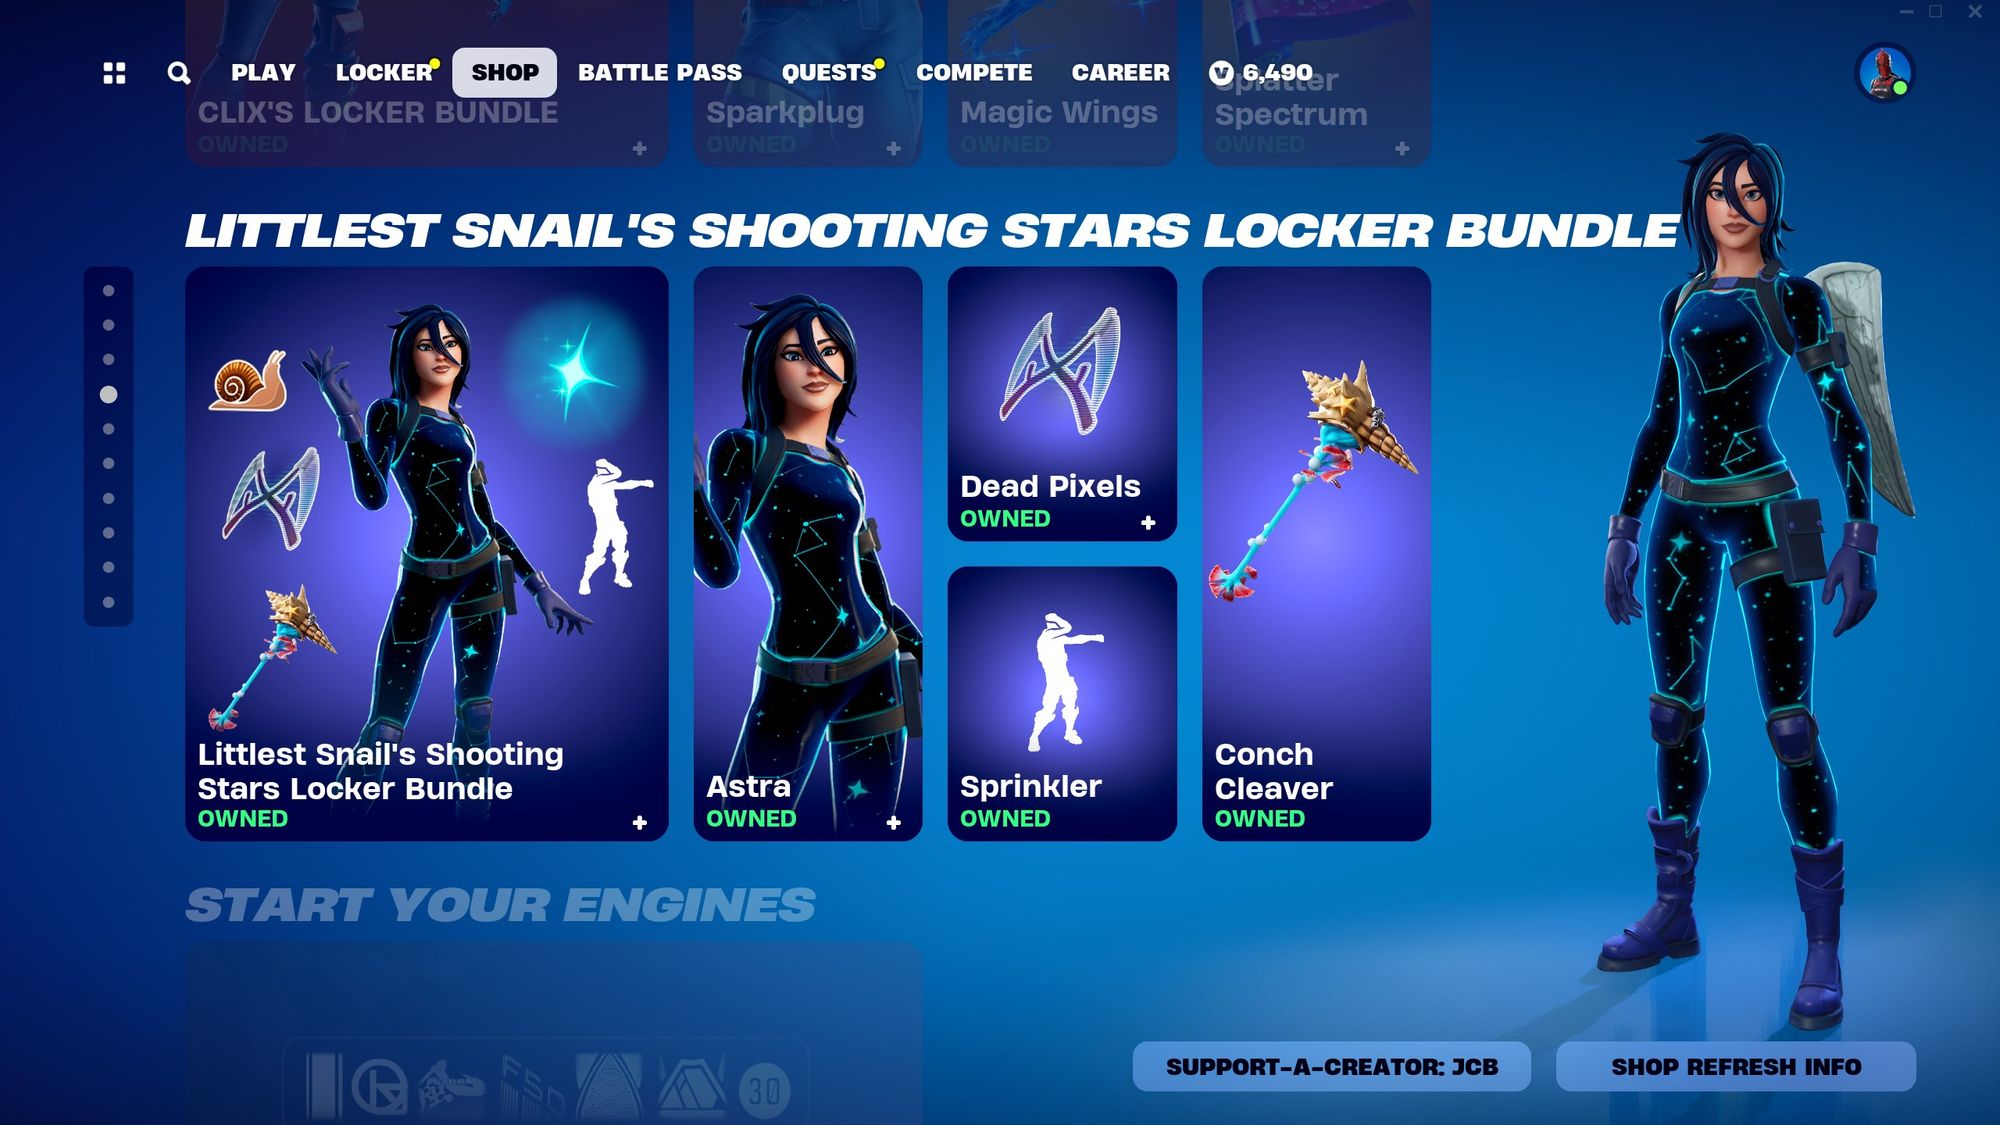 Littlest Snail’s Shooting Stars Locker Bundle Available Now